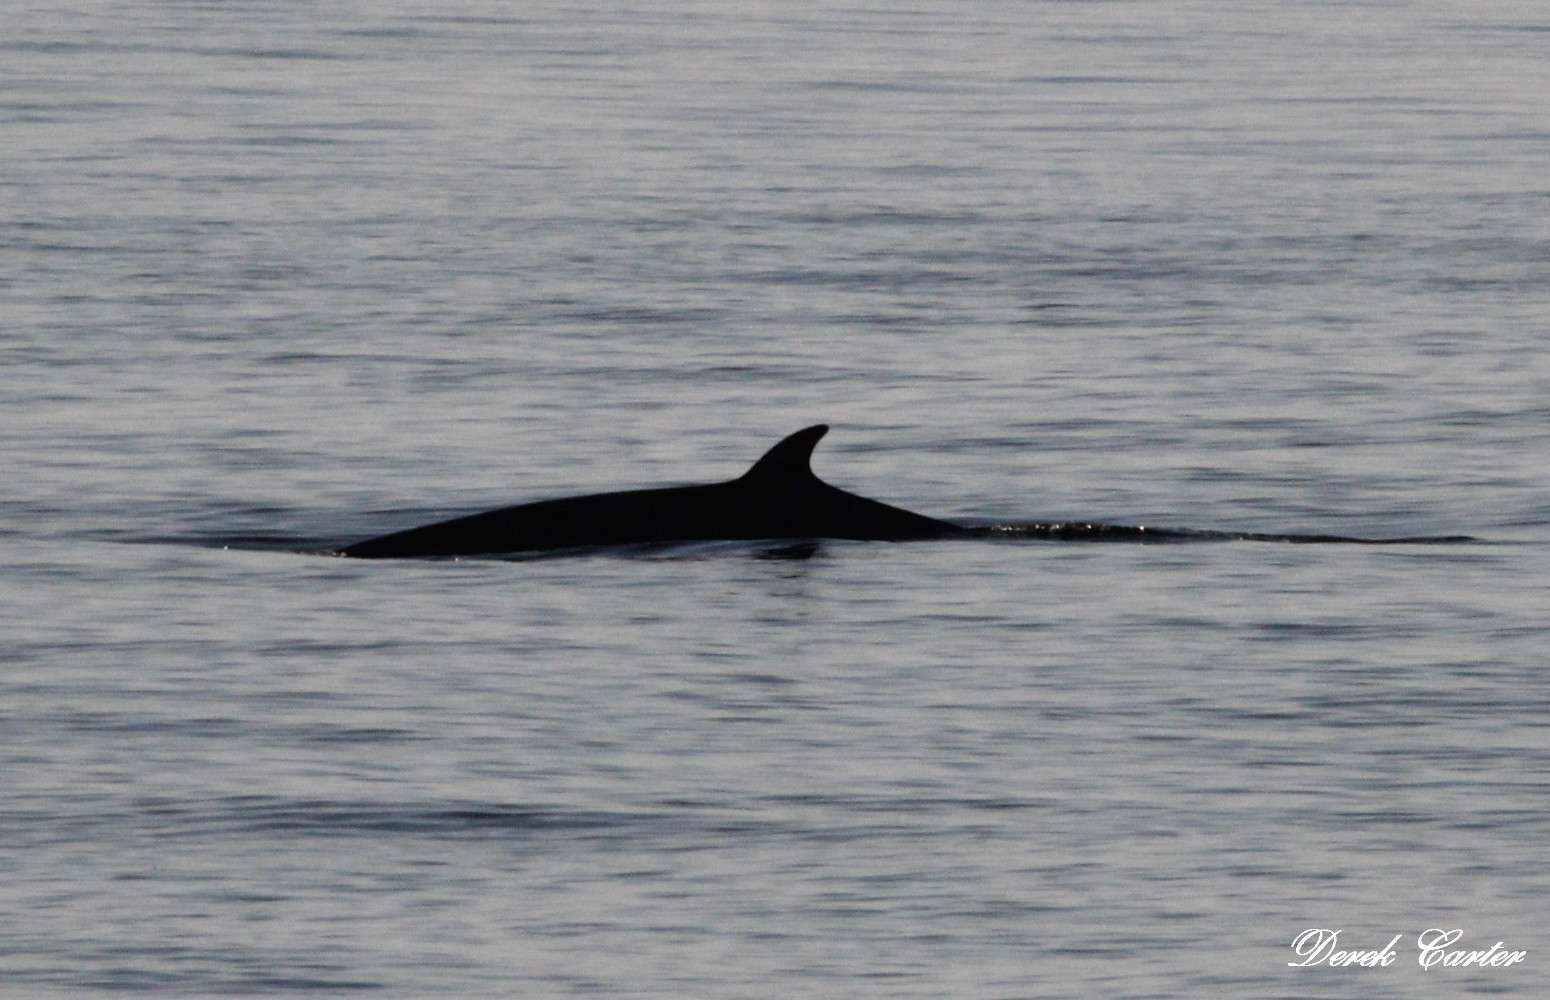 Minke Whale by Derek Carter at Lundy trip